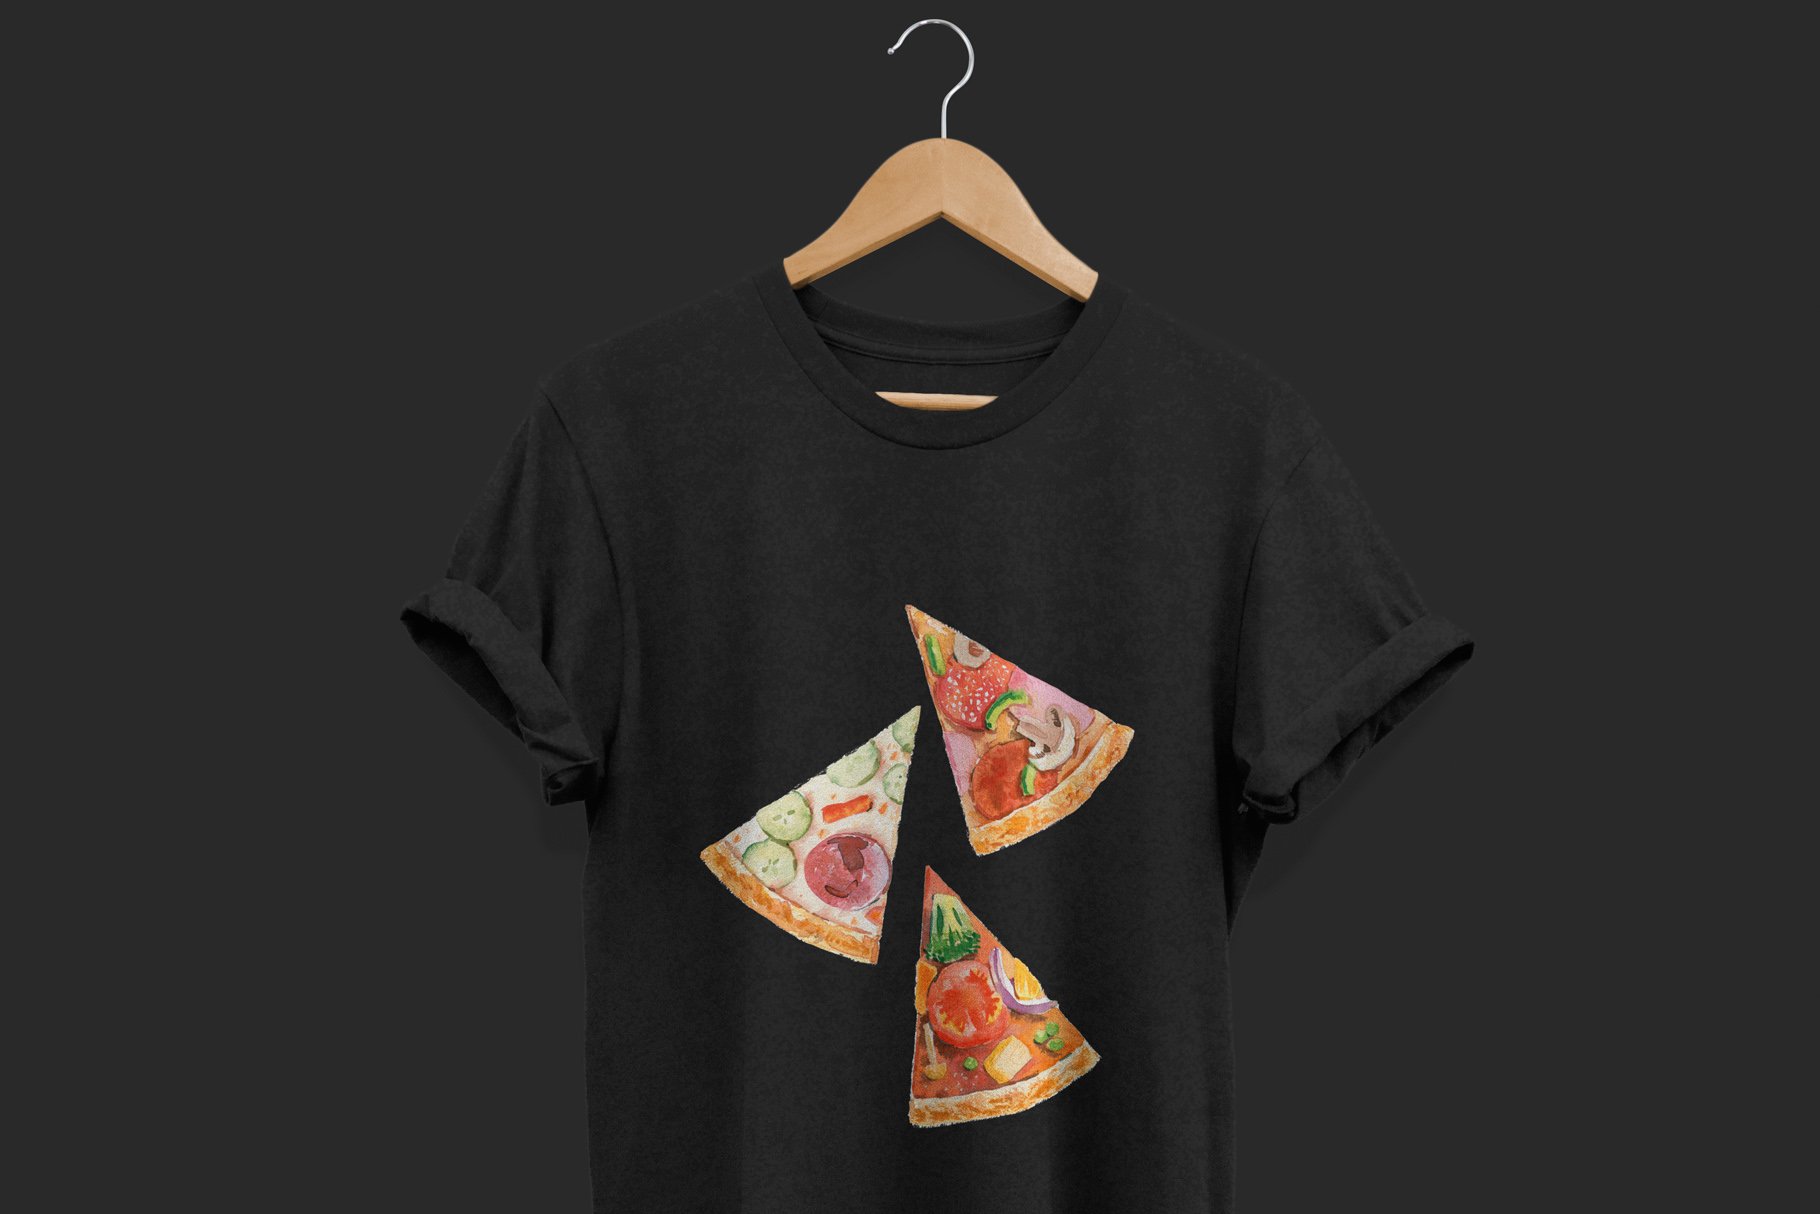 Pizza prints on a black t-shirt.